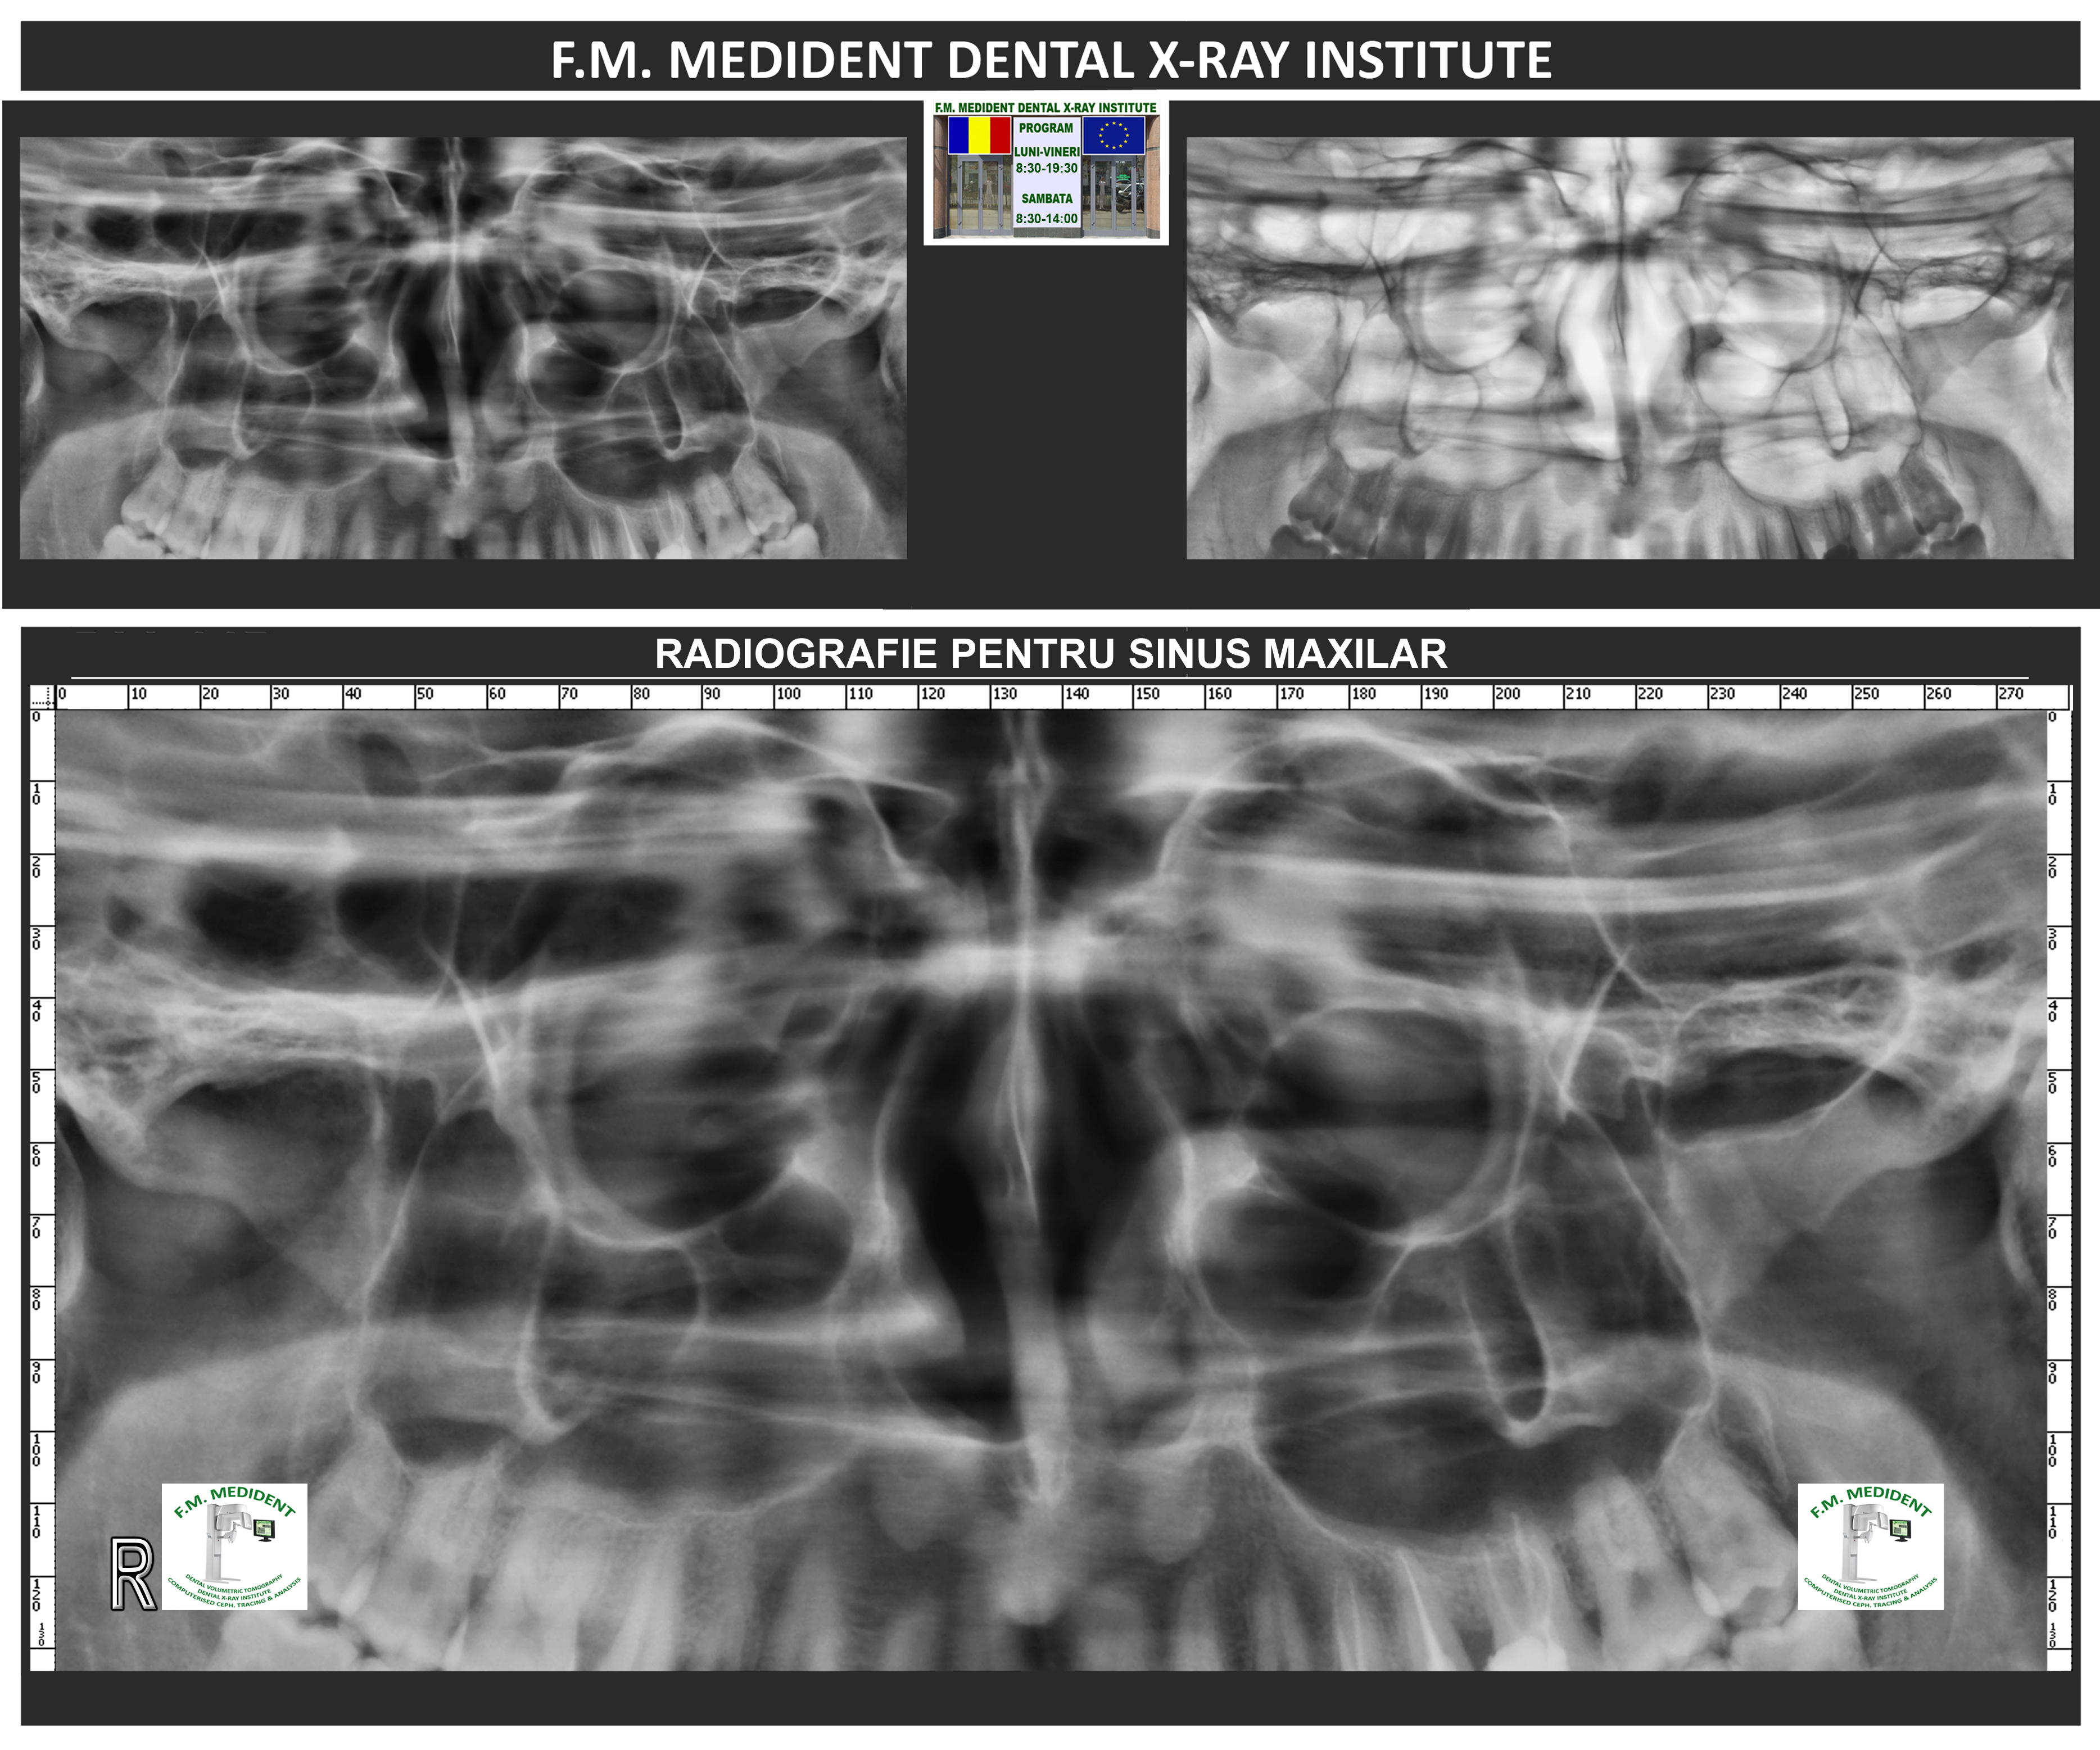 Maxillary sinus radiography